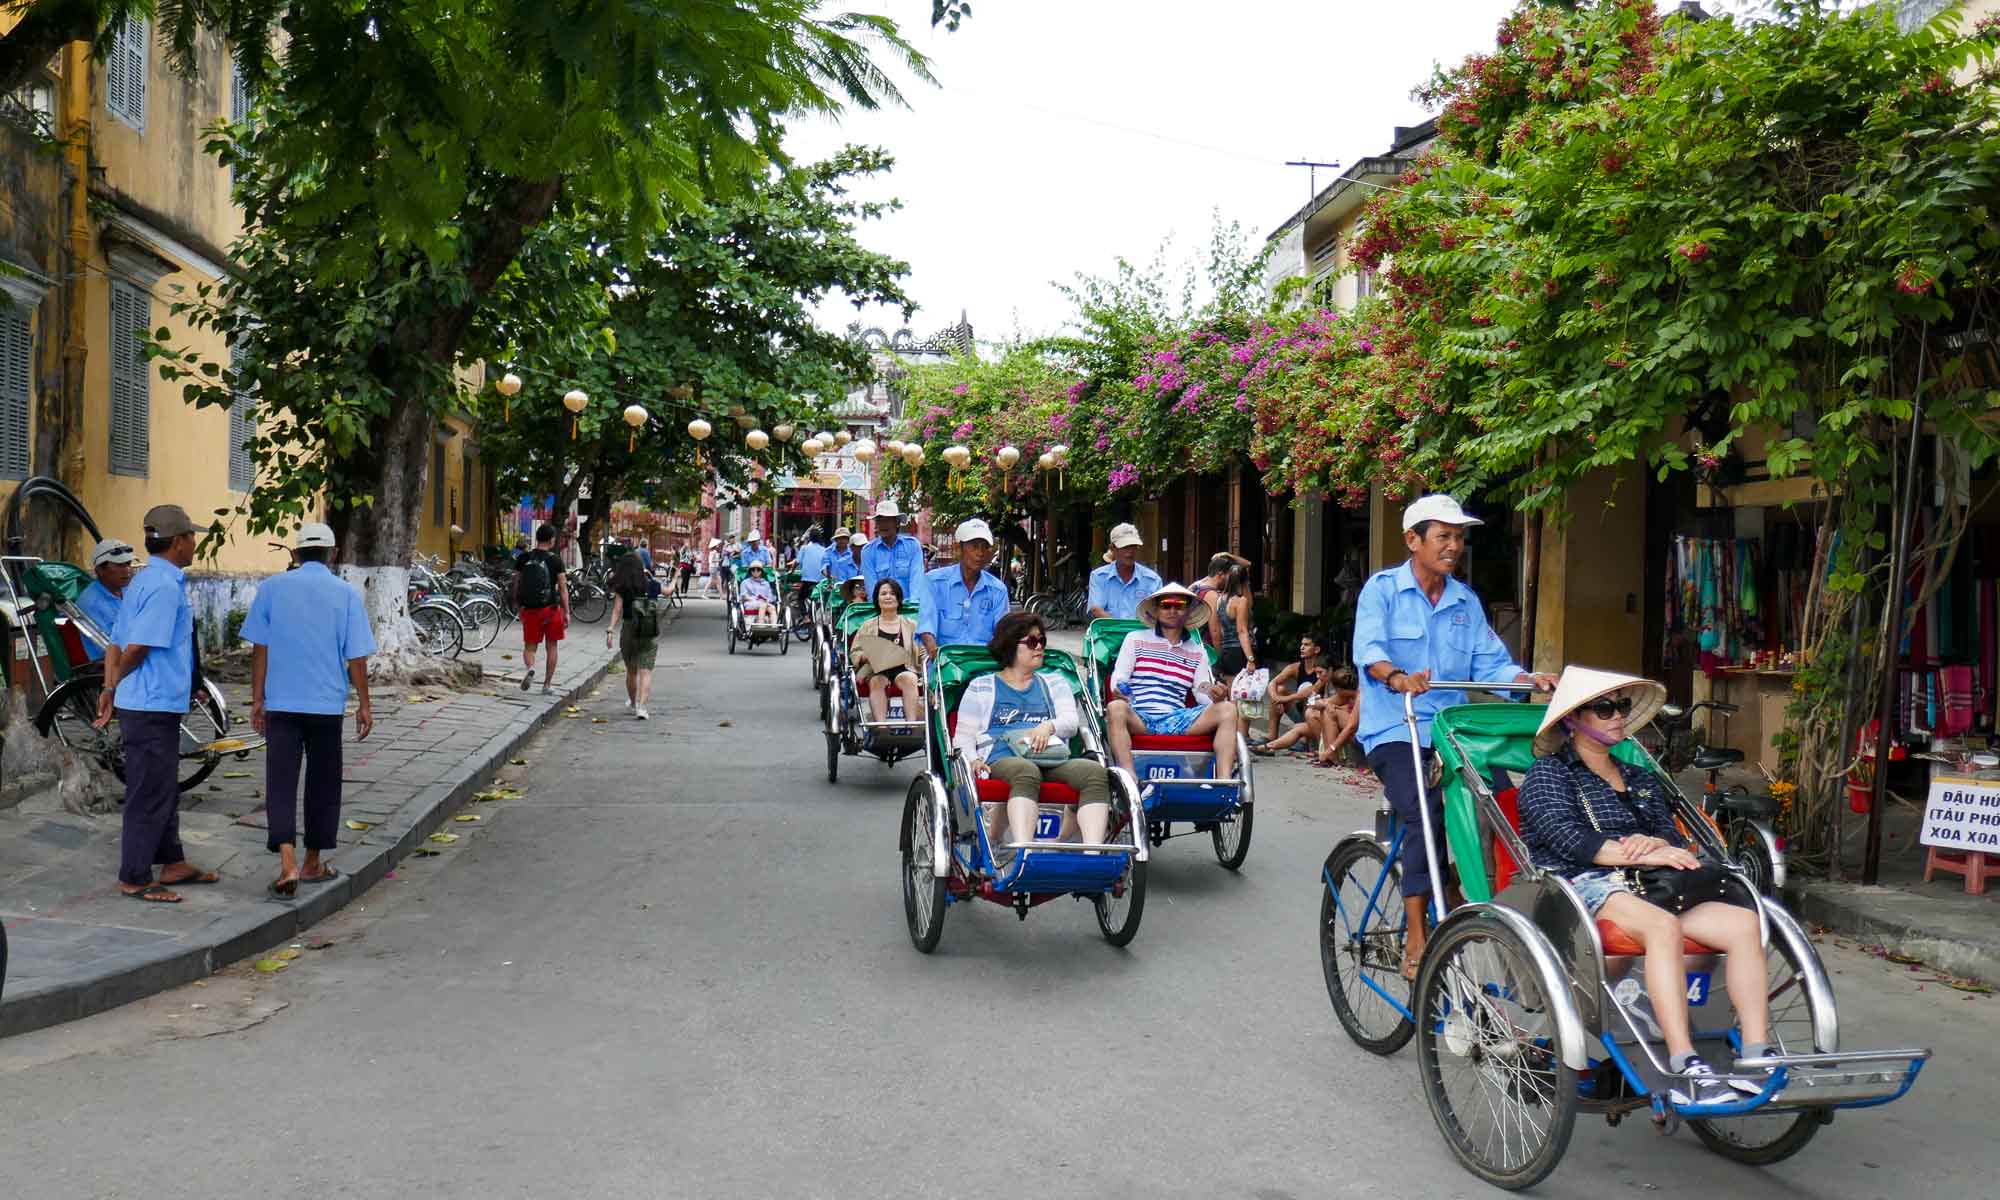 Tourist group on rickshaws in Old Town